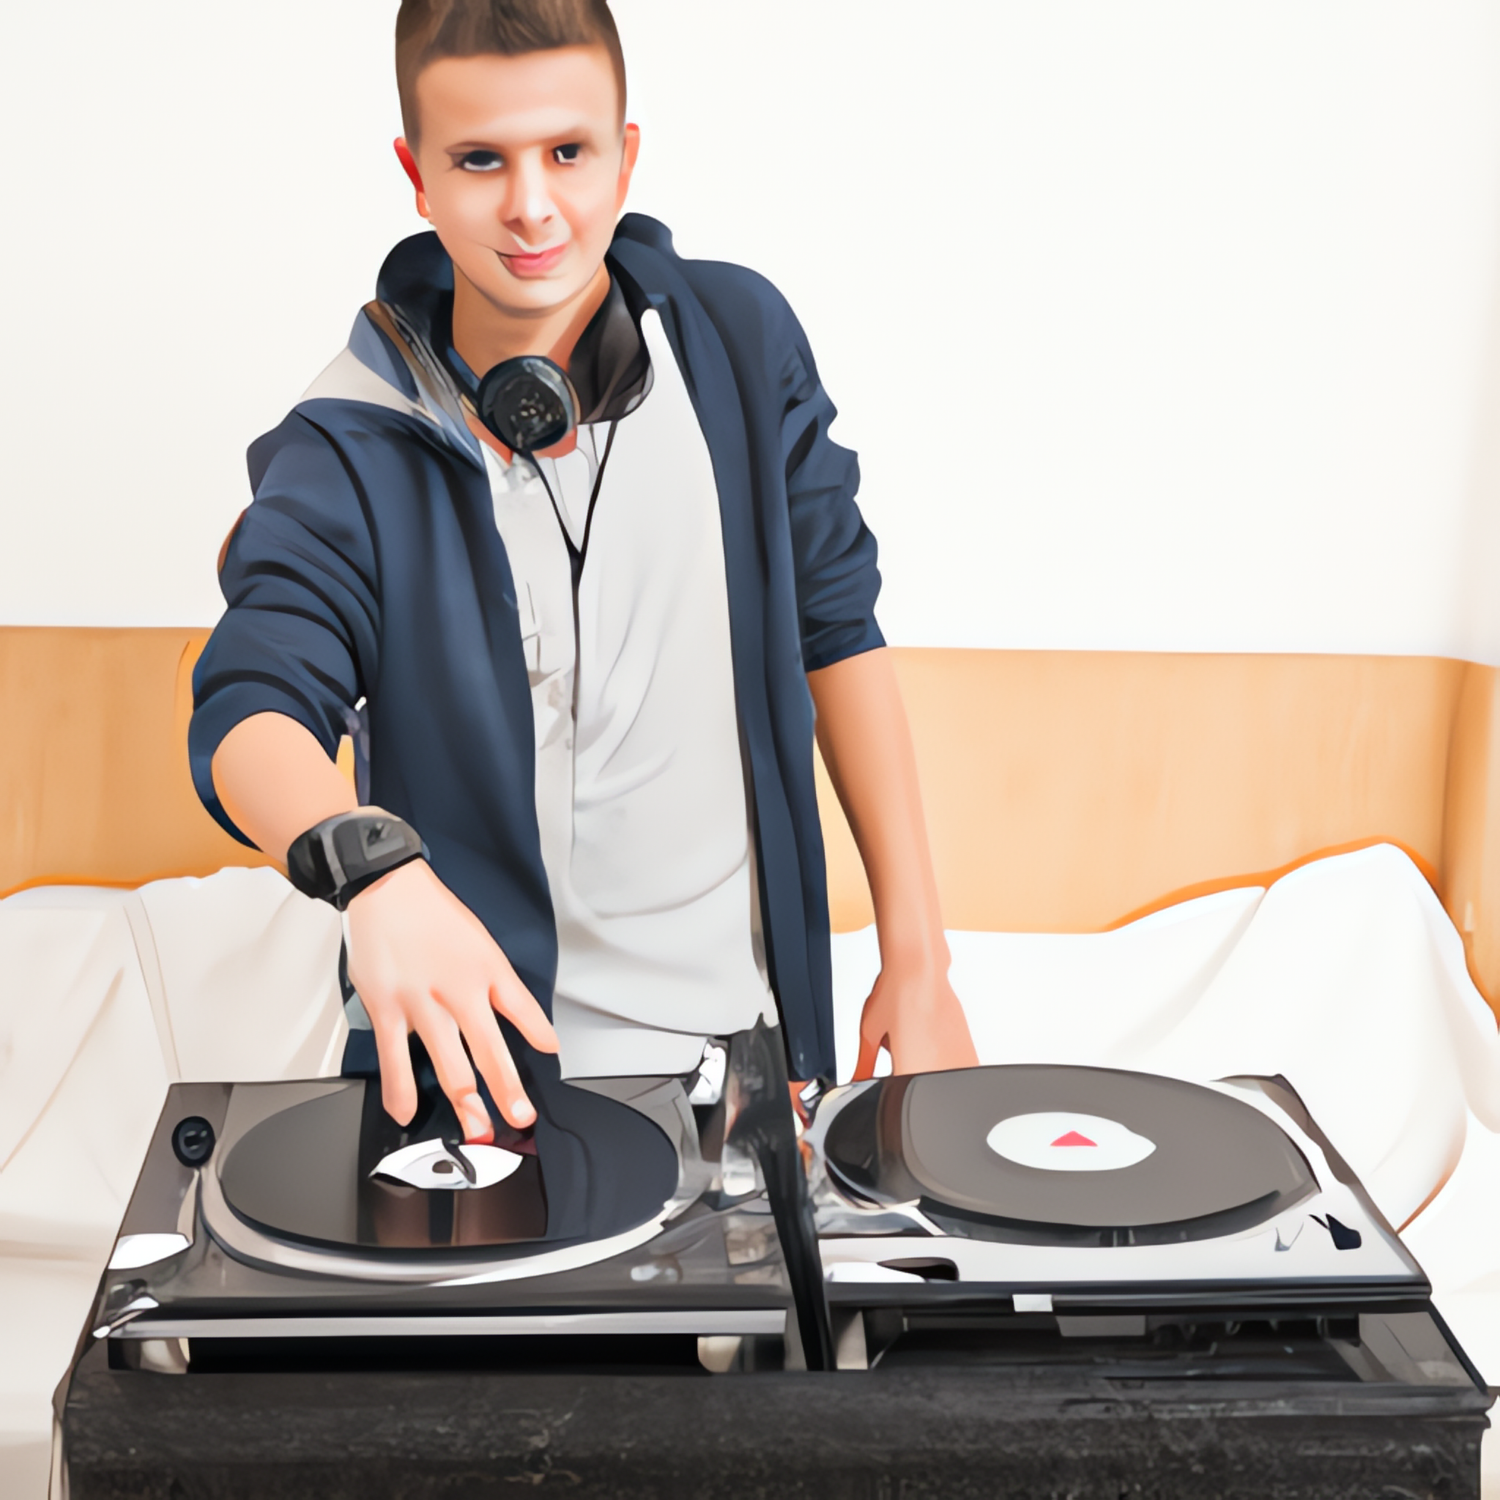 Will I Always Be a Bedroom DJ?